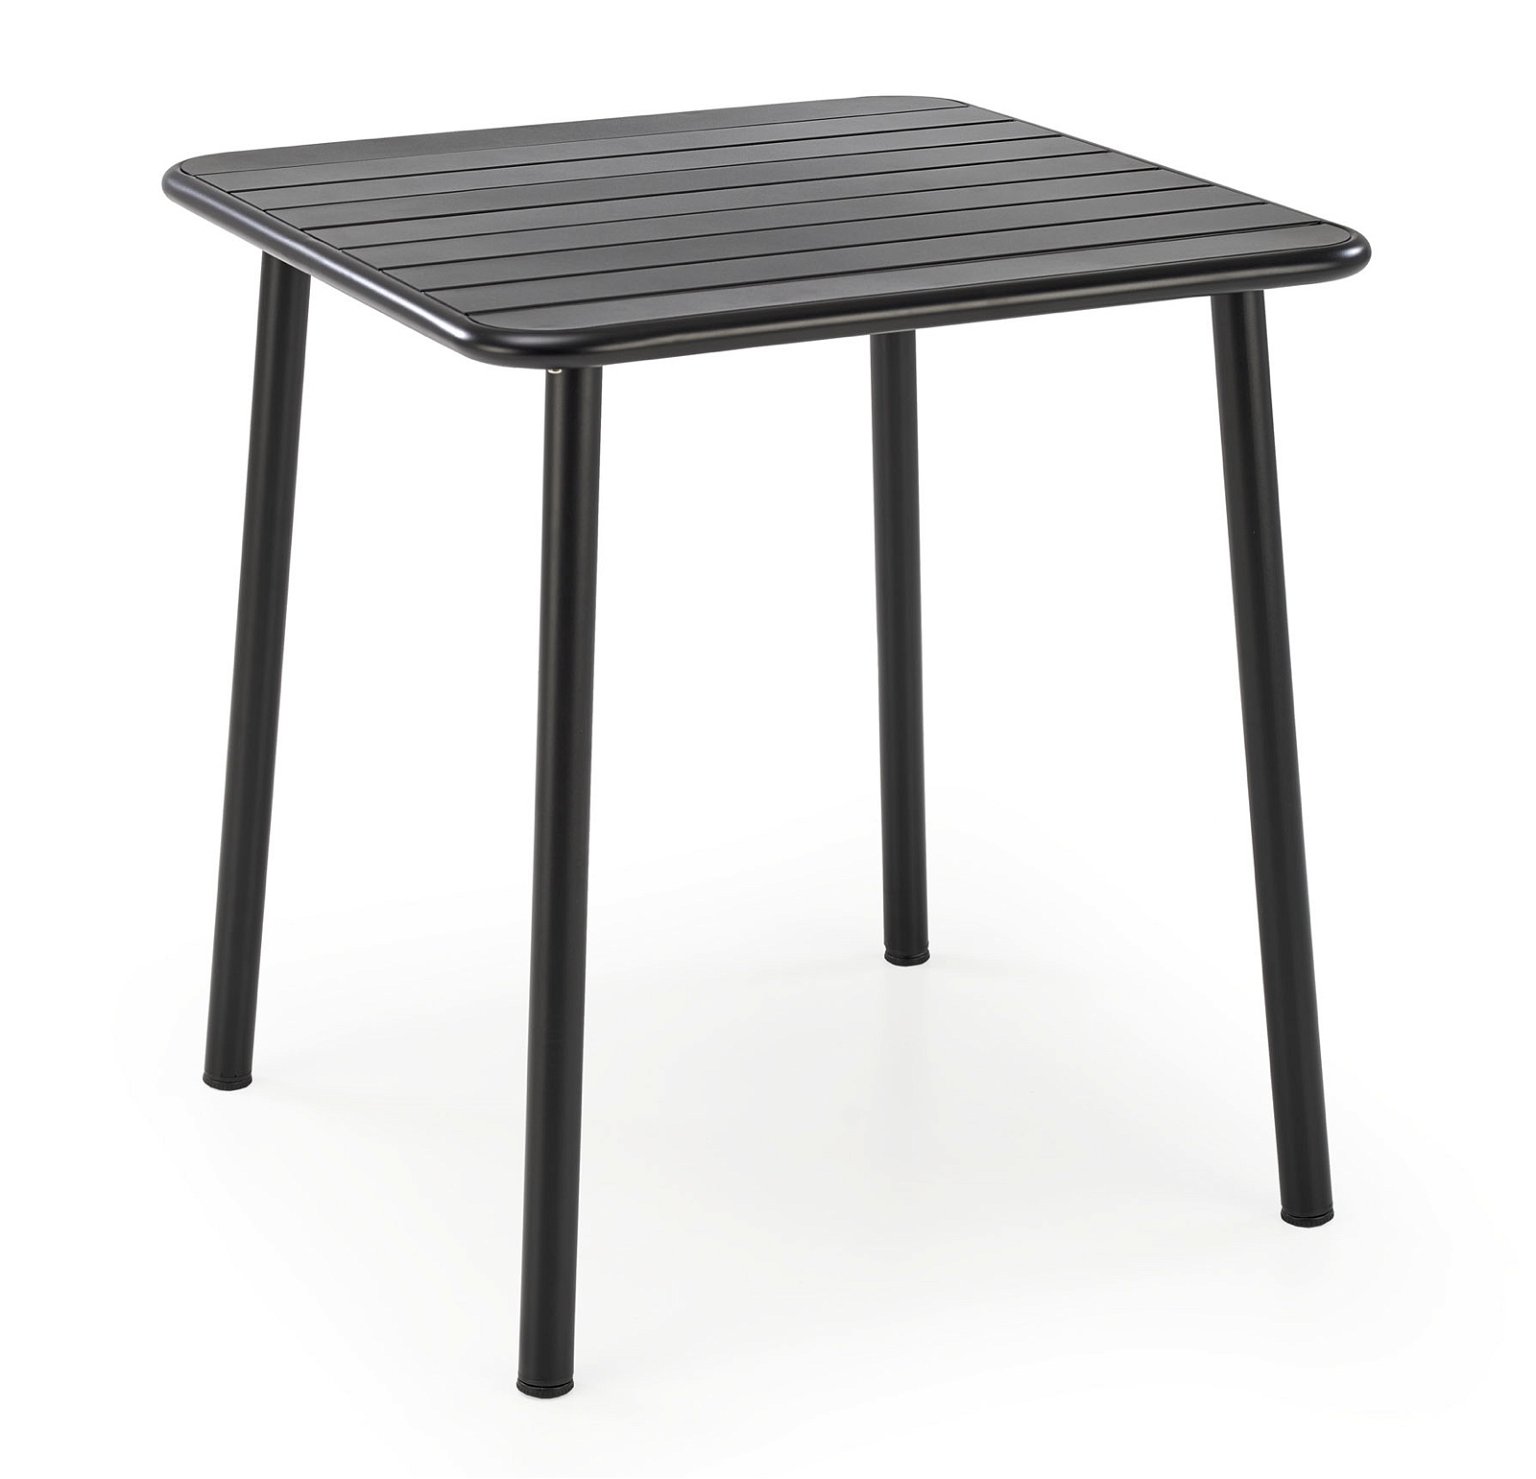 Lauko stalas BOSCO, 70x70x76 cm, juoda